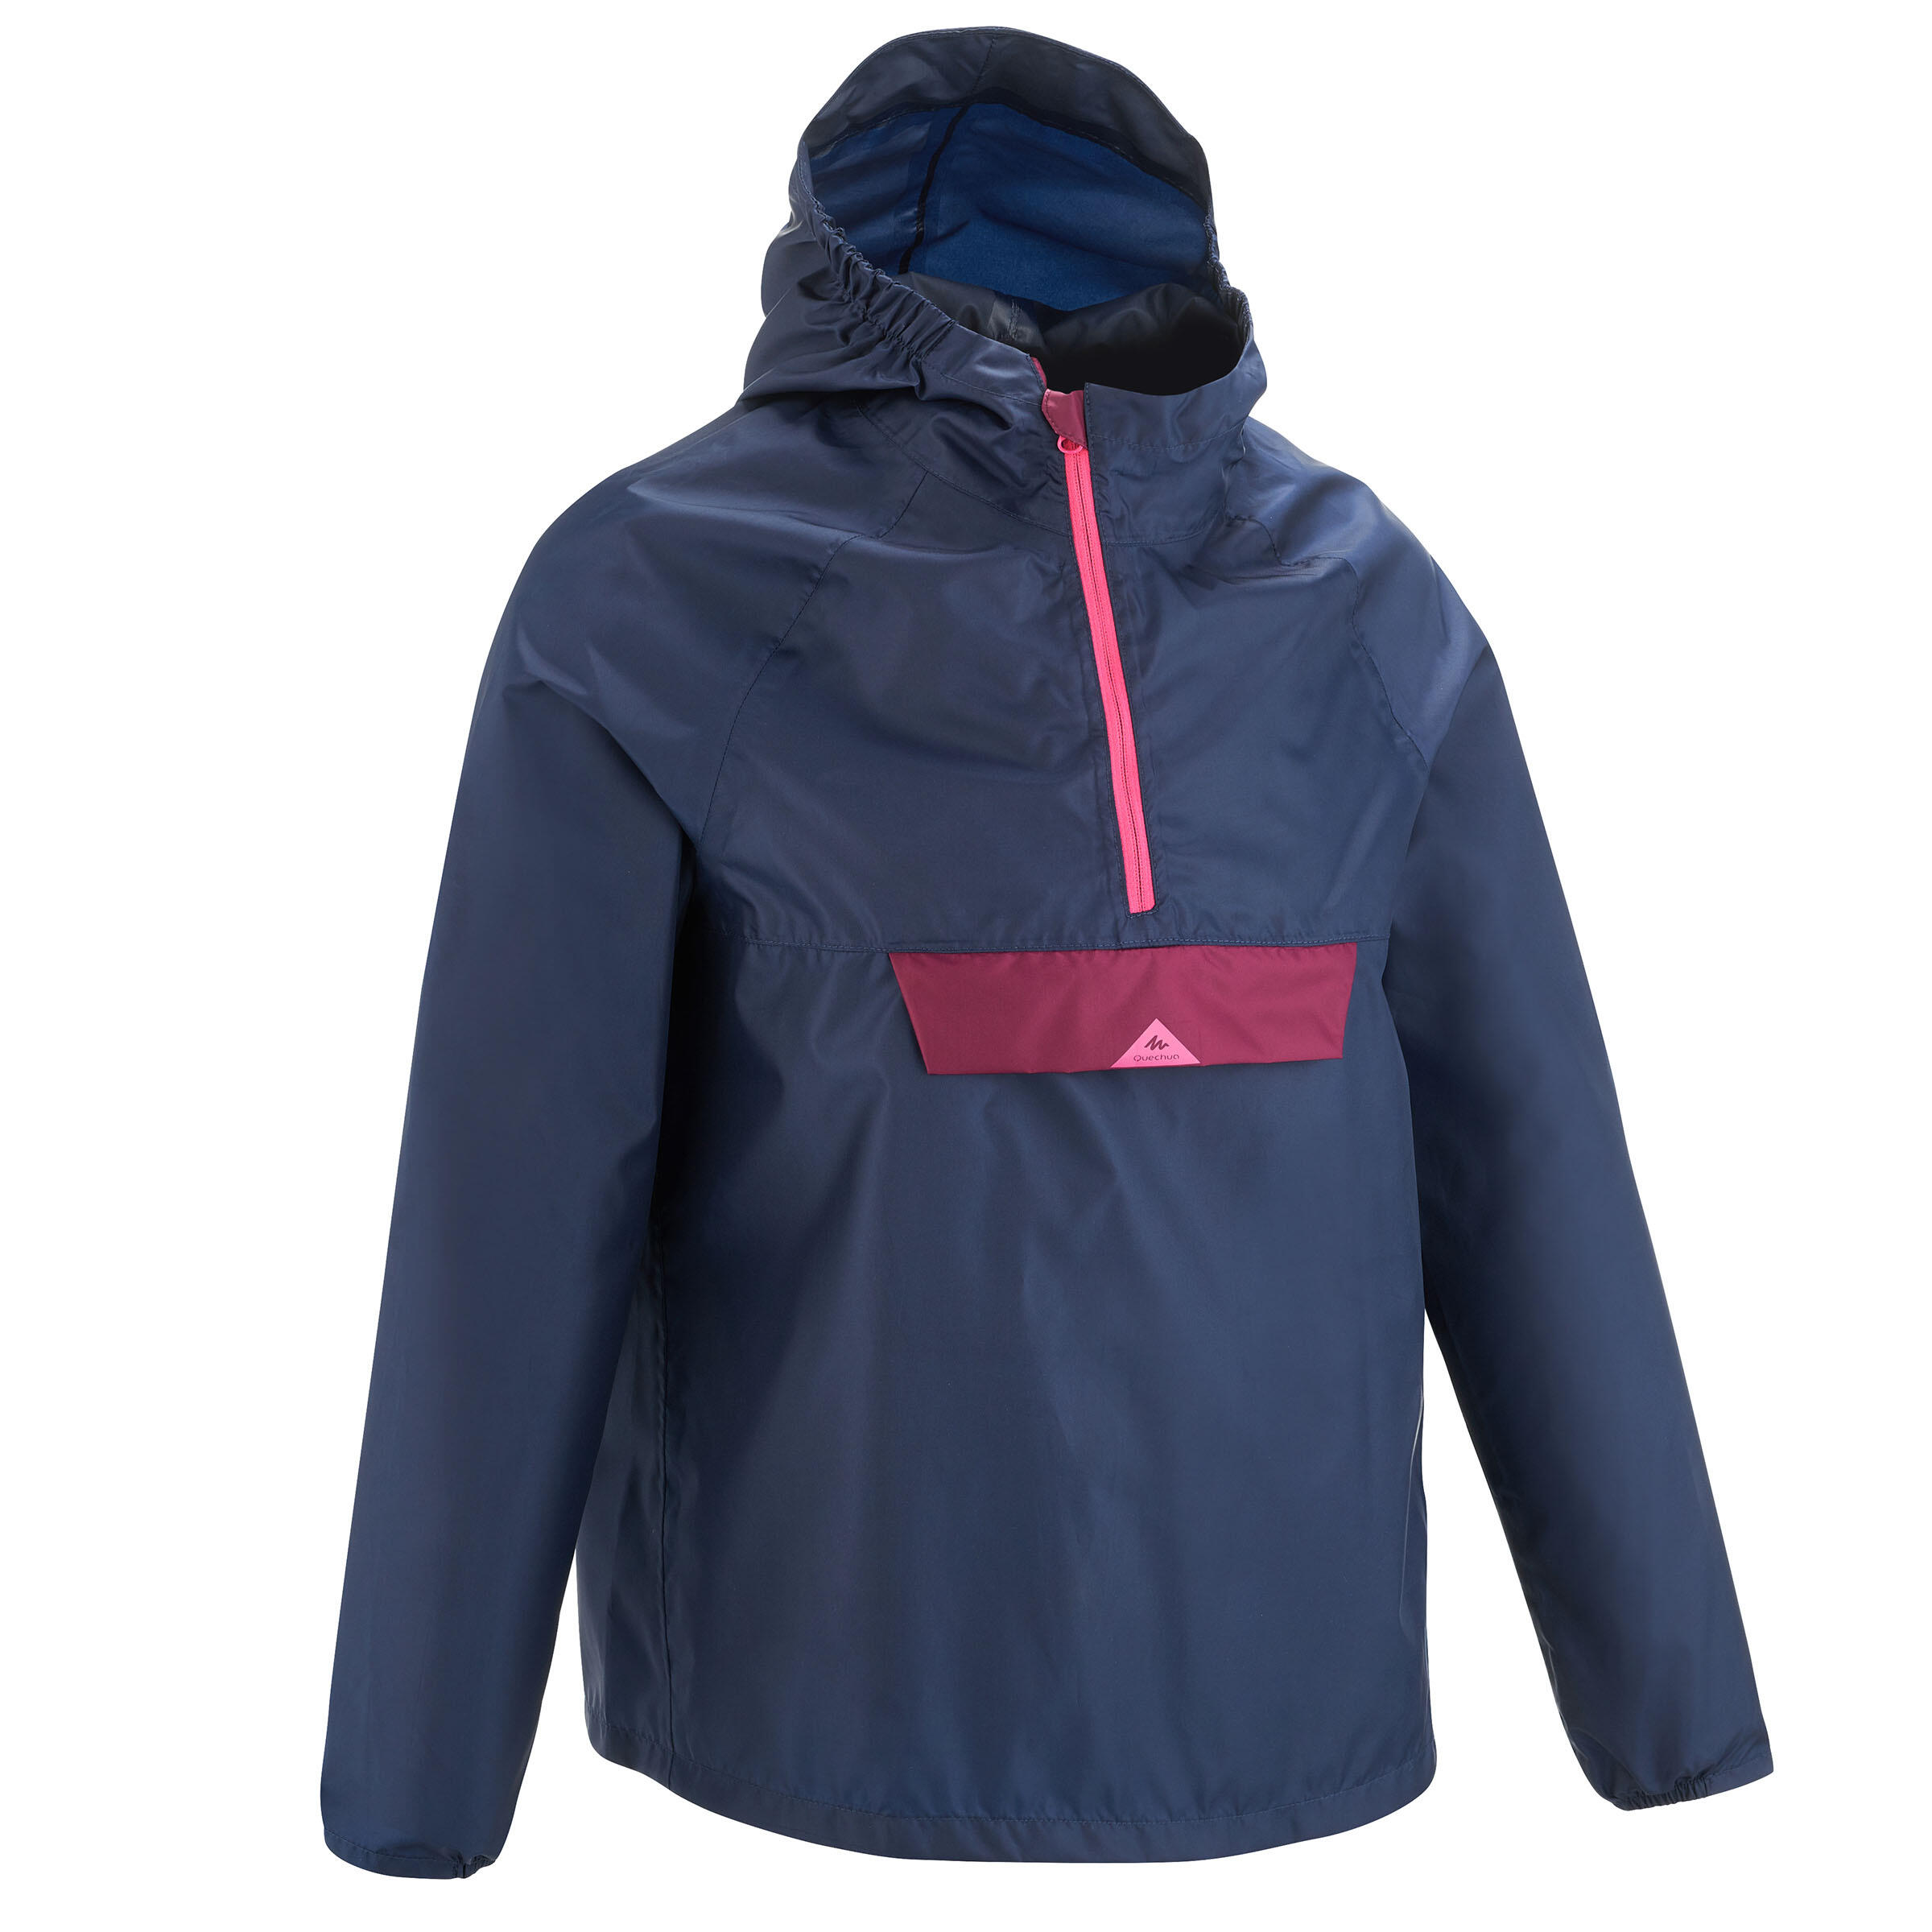 Buy Hiking Raincoat Online at Decathlon 